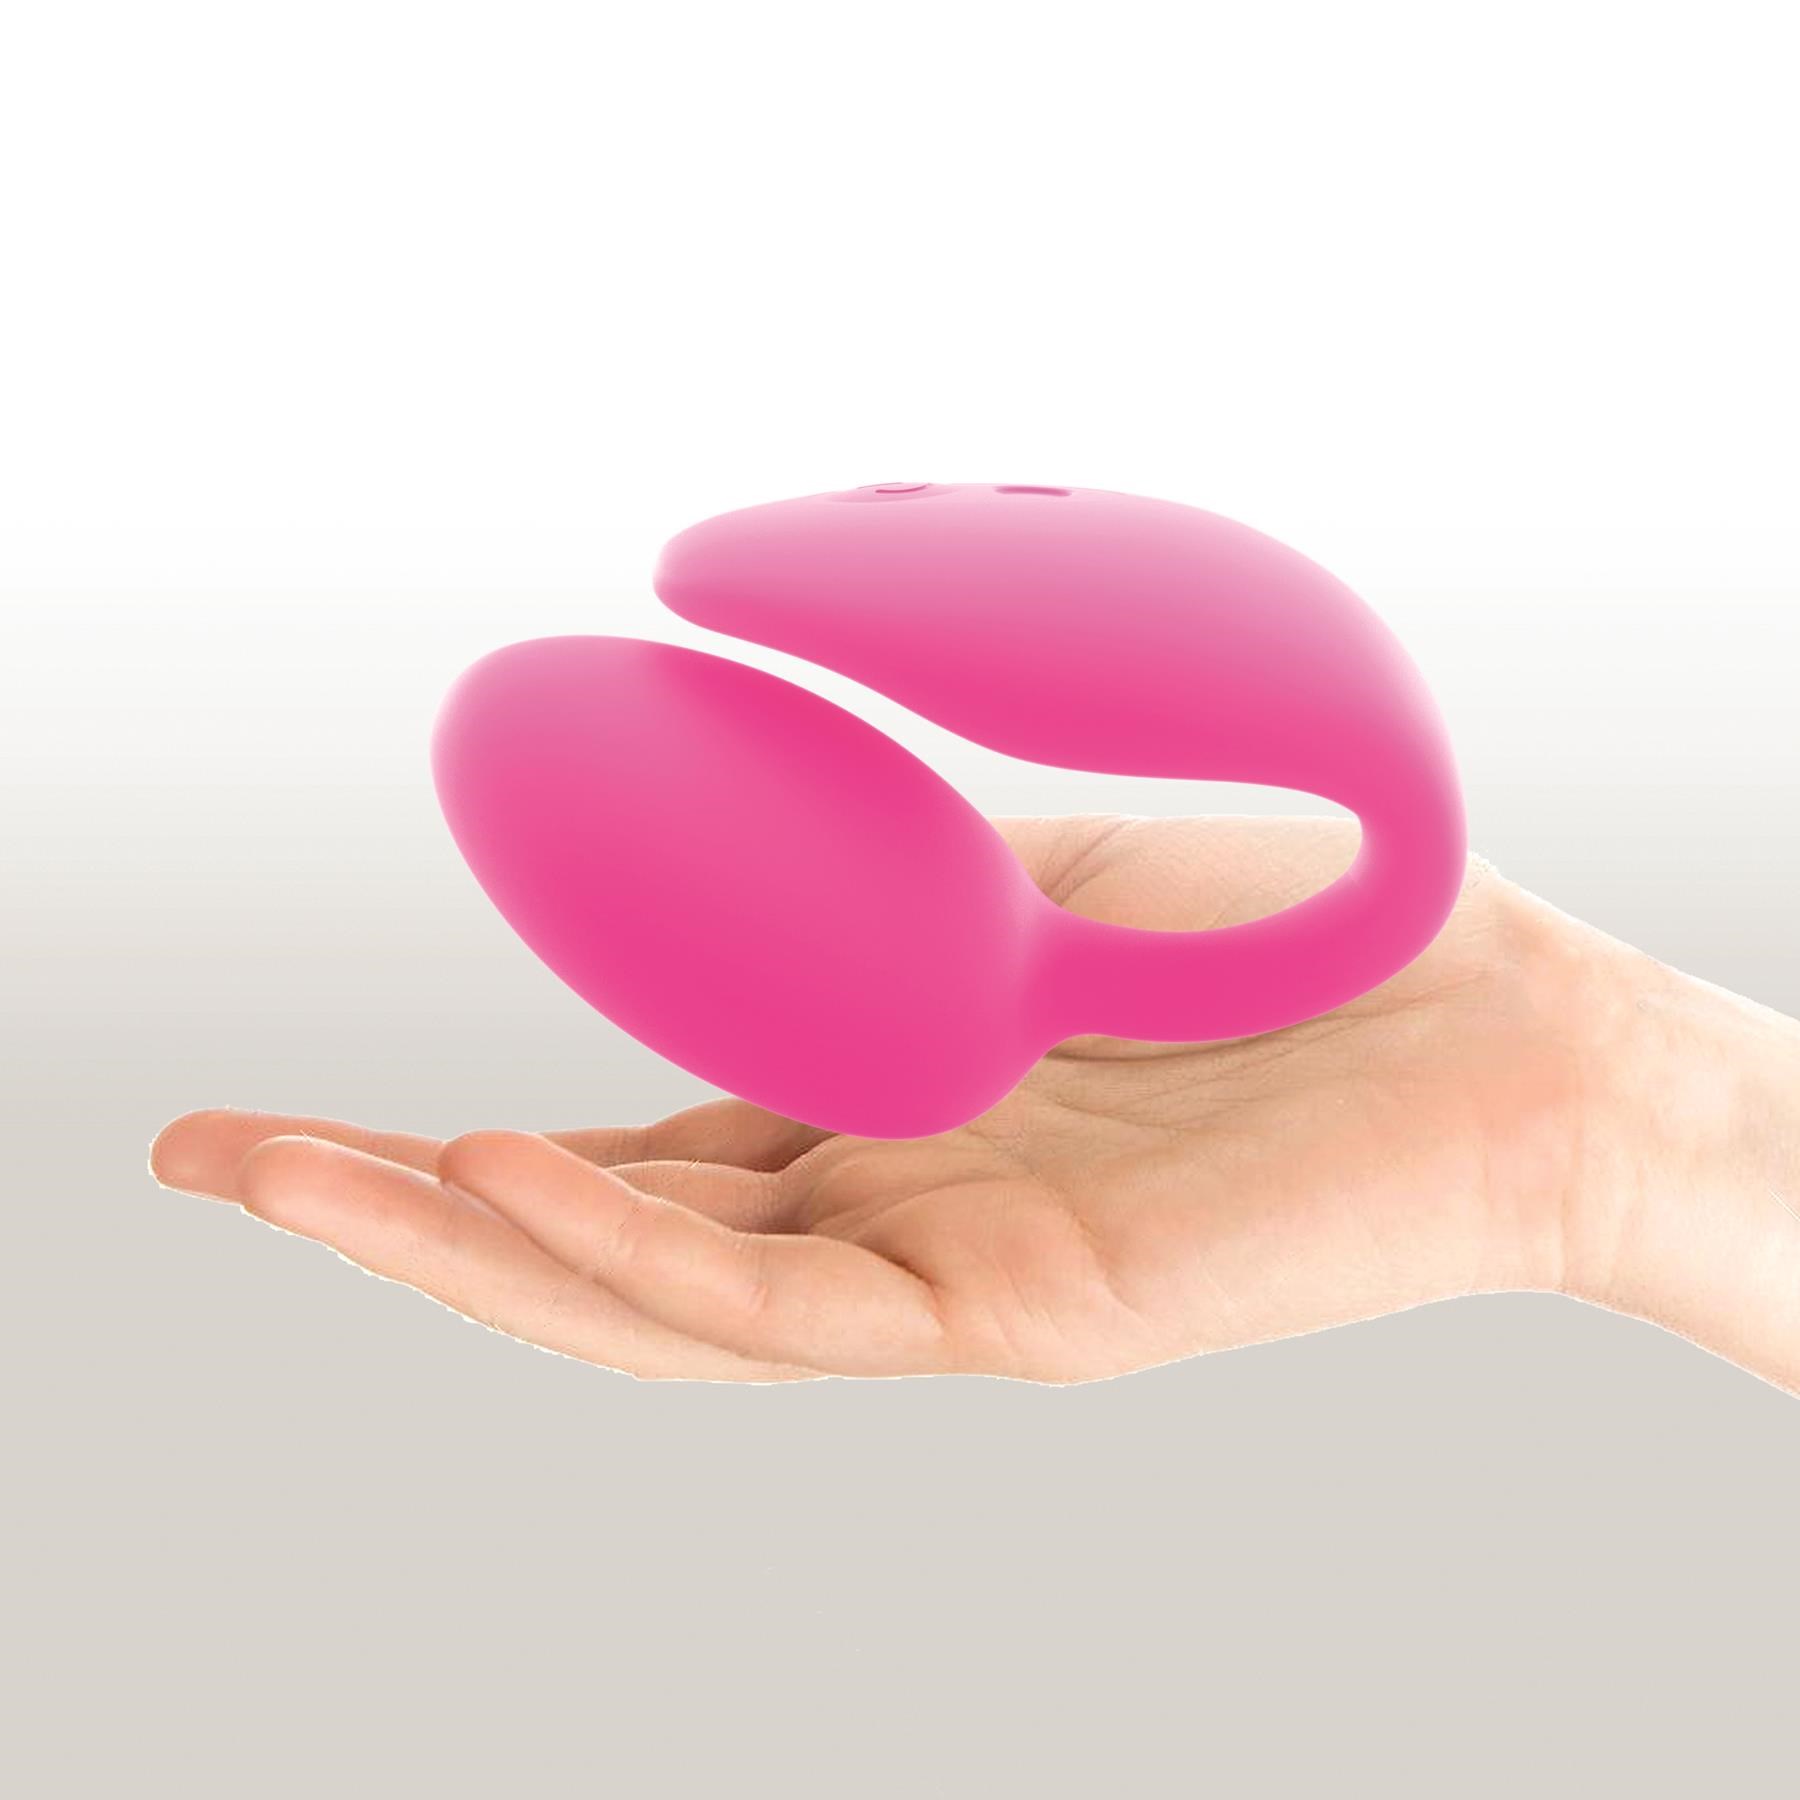 Wonderlove Dual Stimulating Massager With Remote Hand Shot to Show Size